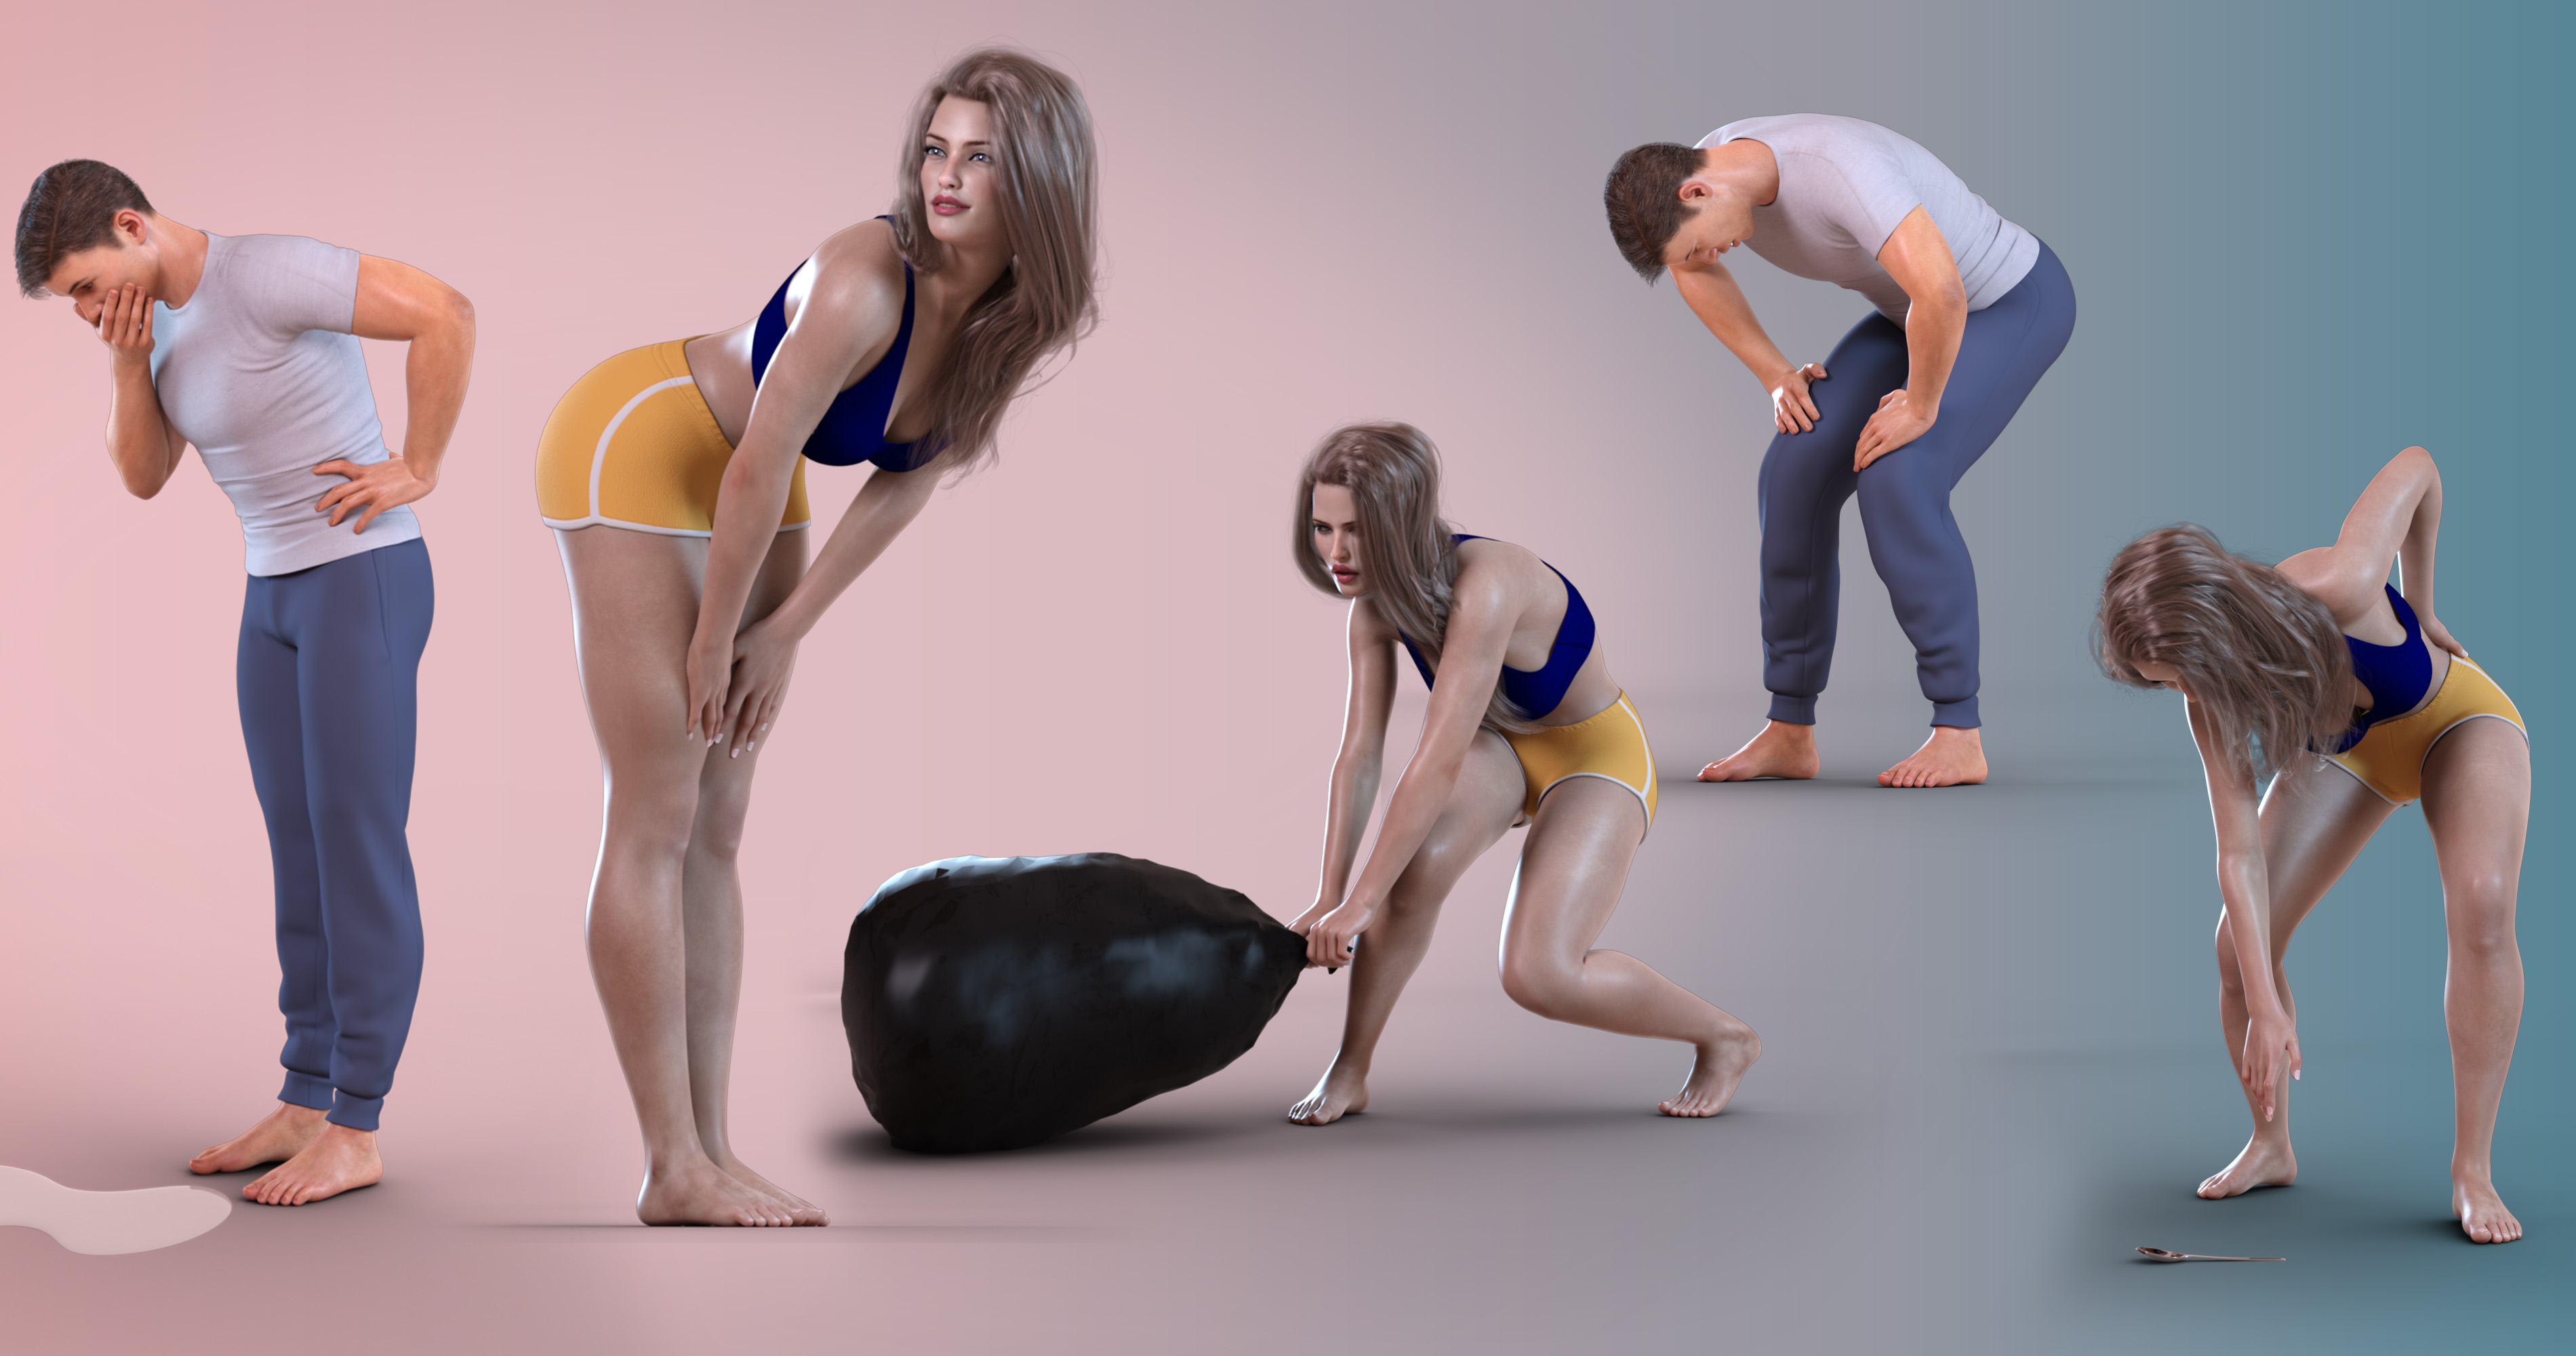 Z Bending Down Pose Partials Mega Set by: Zeddicuss, 3D Models by Daz 3D